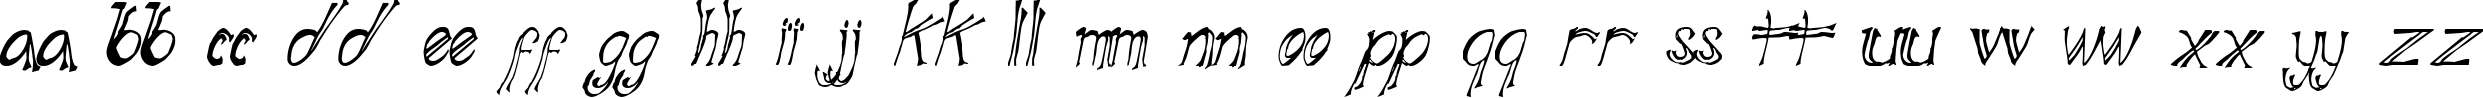 Пример написания английского алфавита шрифтом Blue Mutant Double Serif